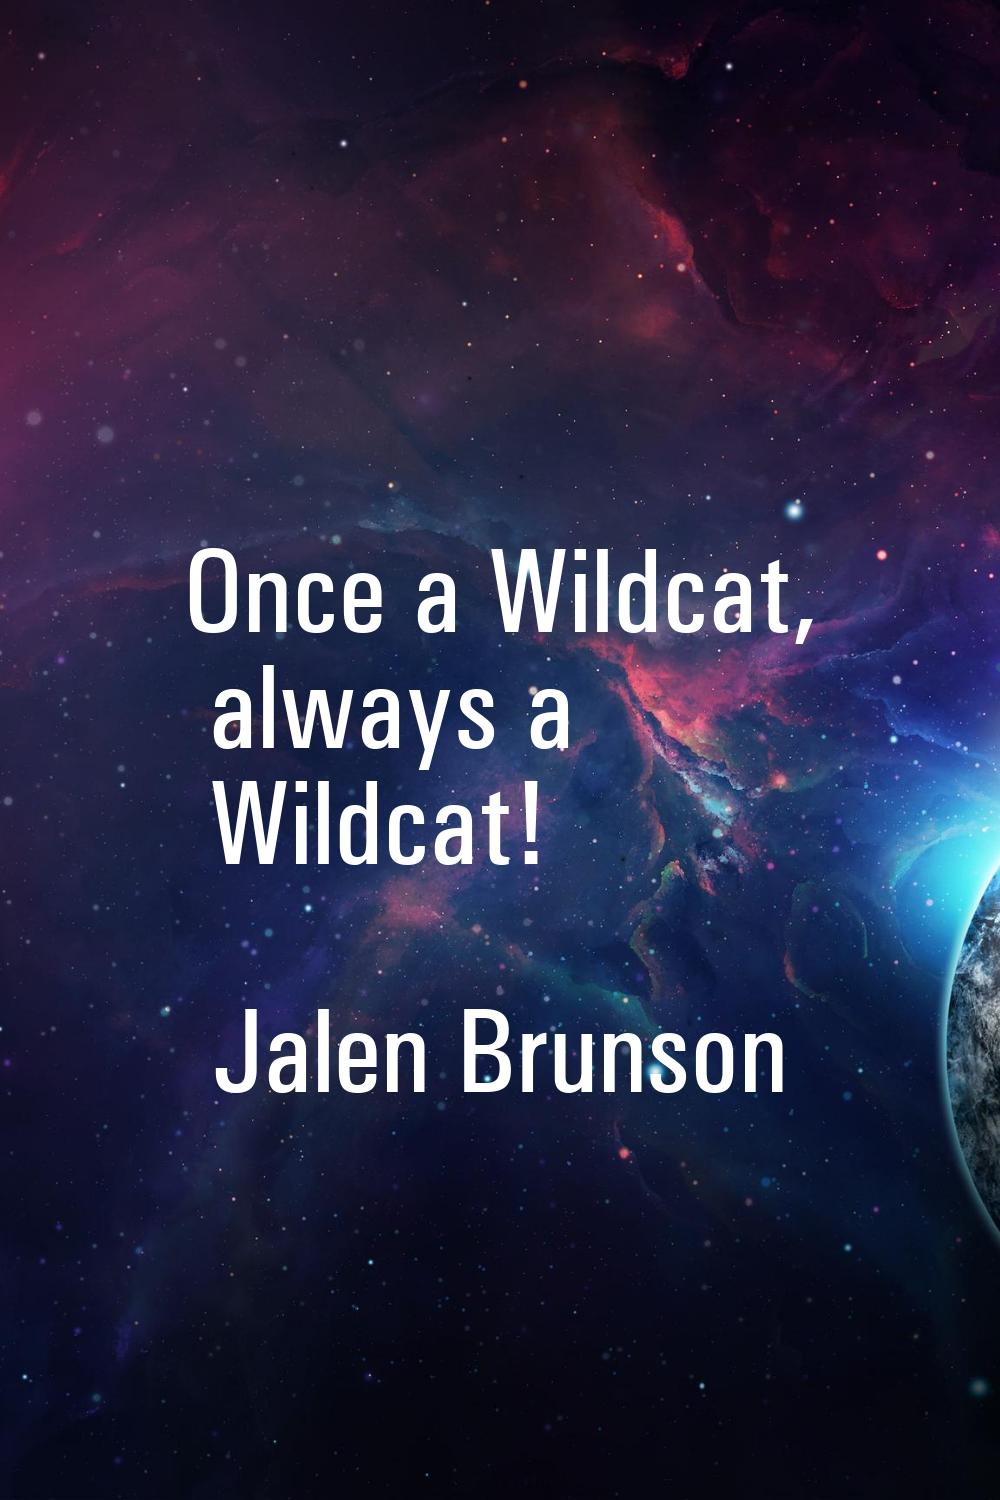 Once a Wildcat, always a Wildcat!